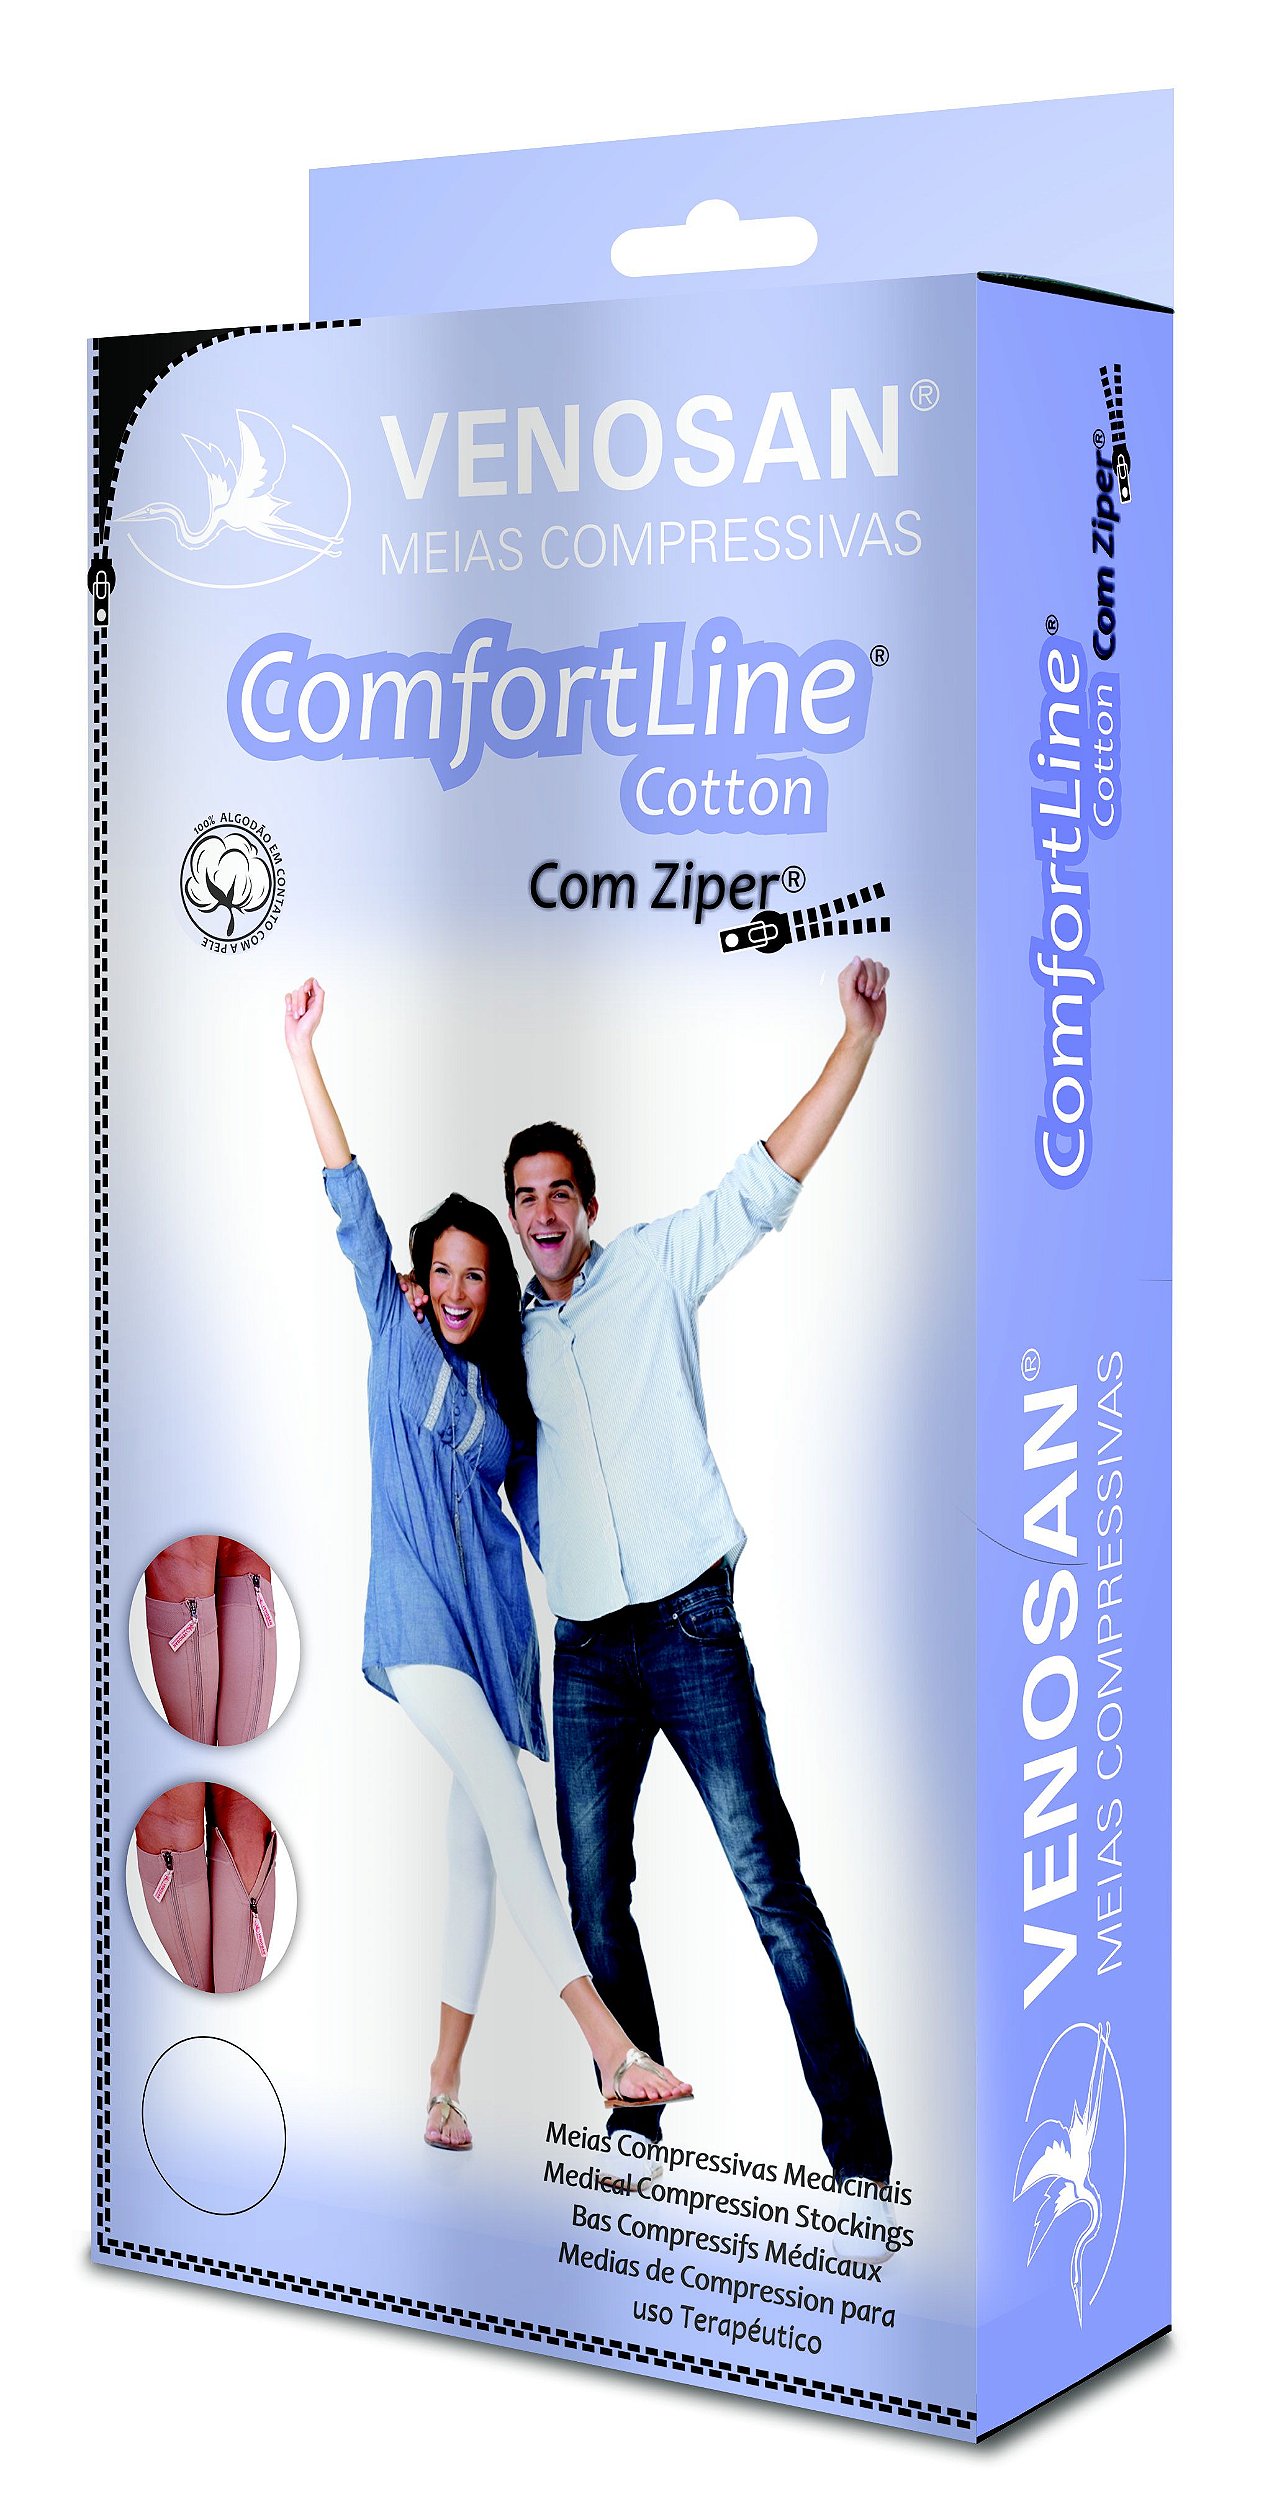 Meias Venosan Comfortline Cotton com Ziper Panturrilha 20-30mmHg